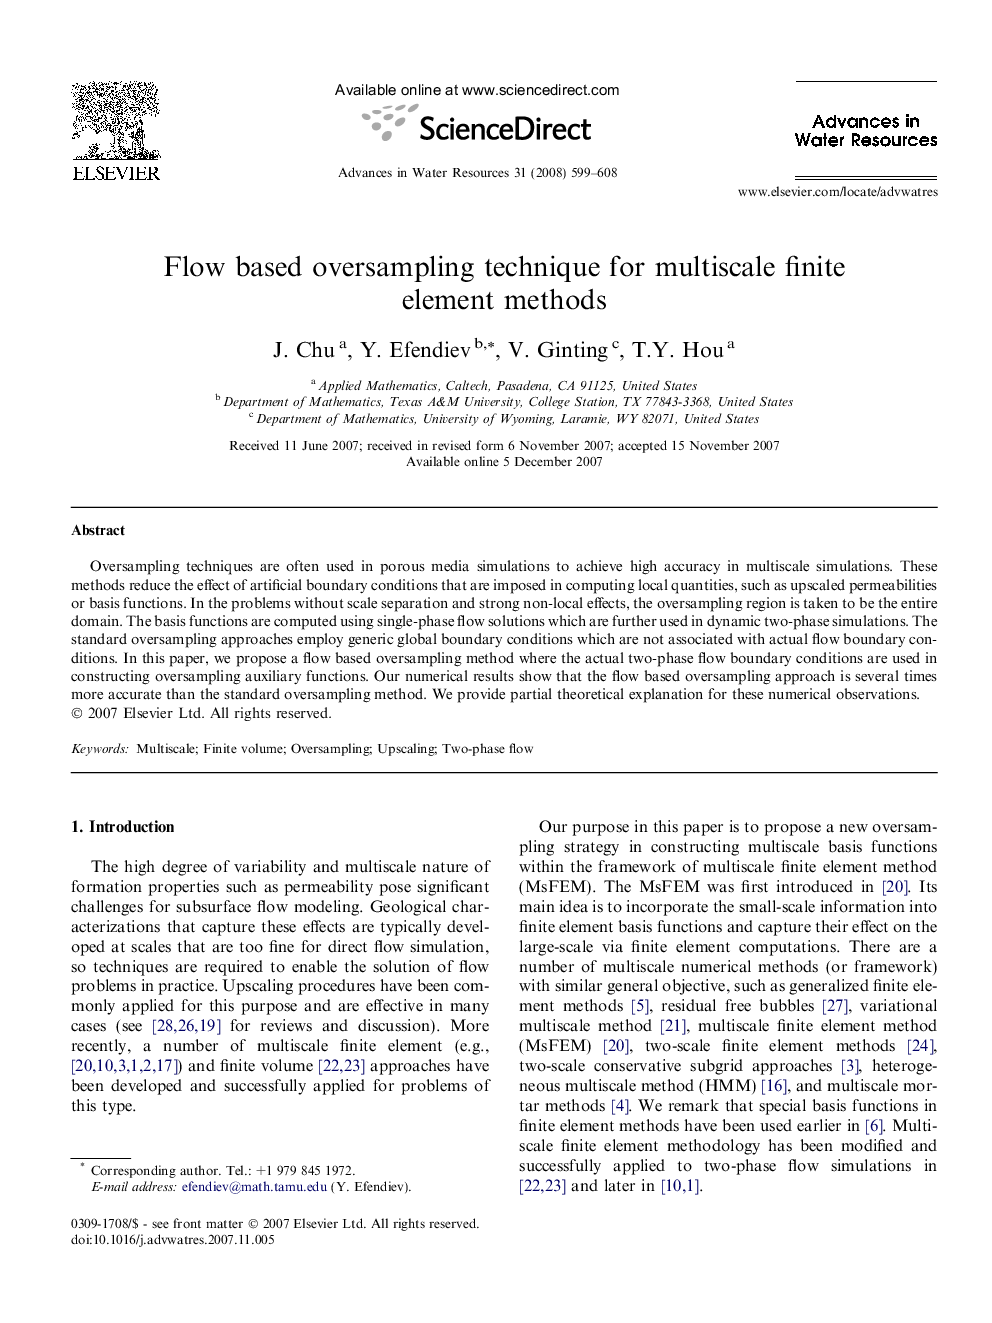 Flow based oversampling technique for multiscale finite element methods